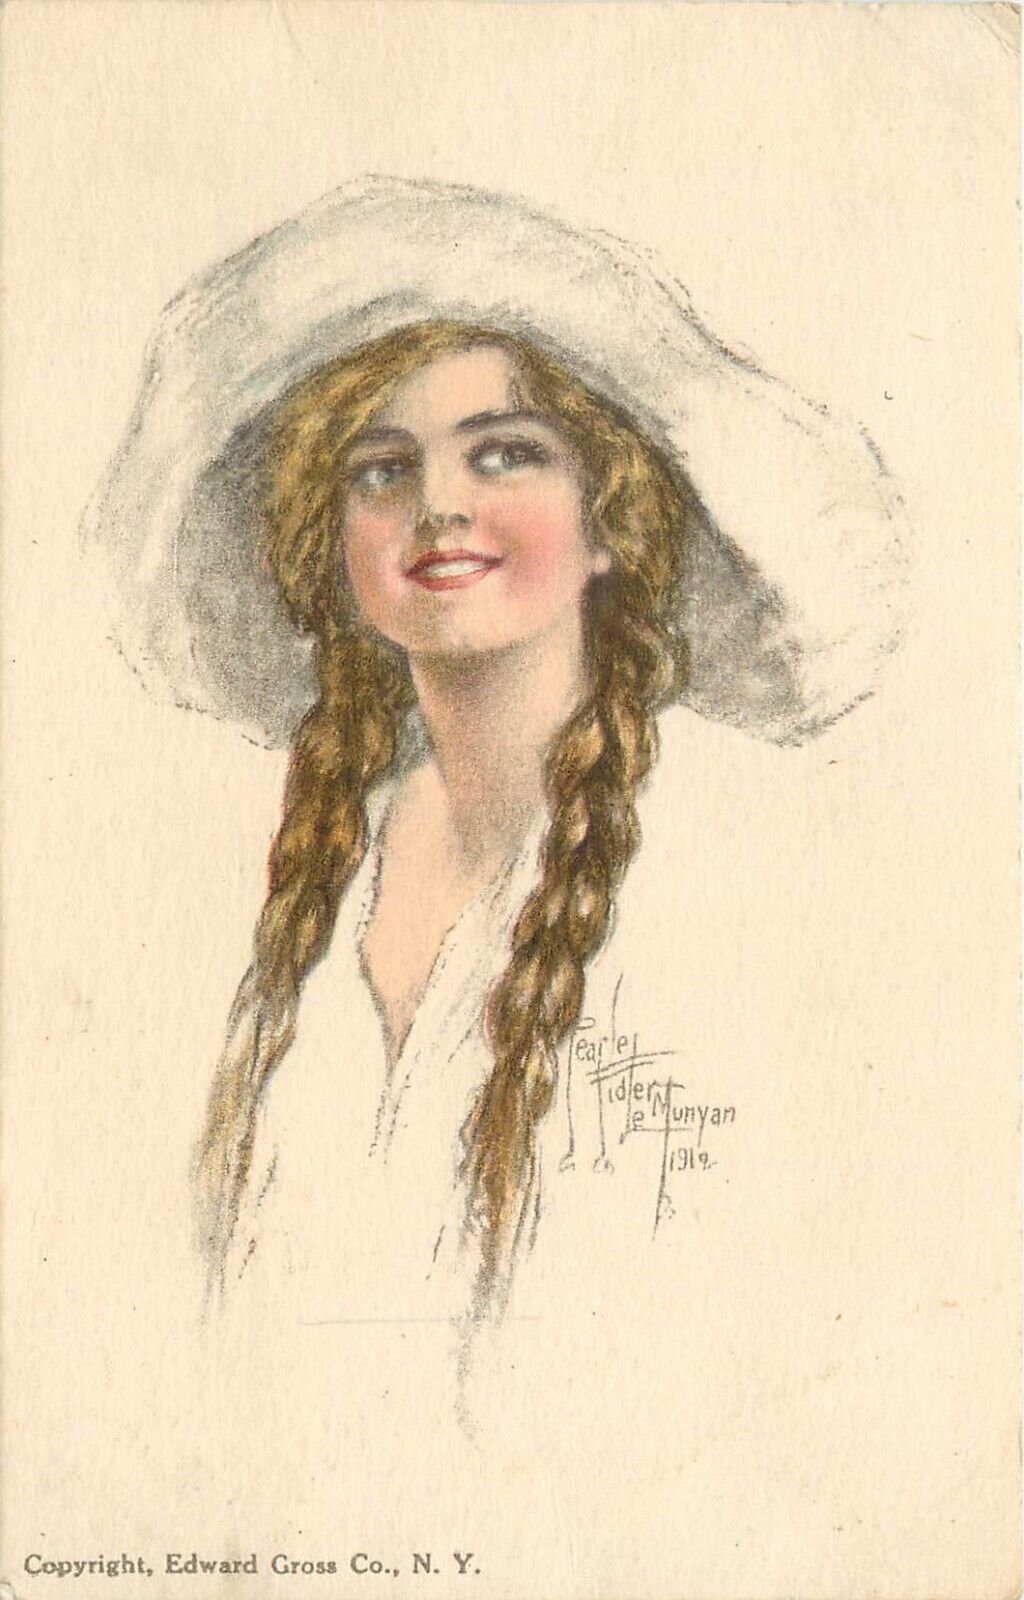 Pearle Fidler LeMunyan Postcard American Girl 33. Blonde in Braids, White Hat